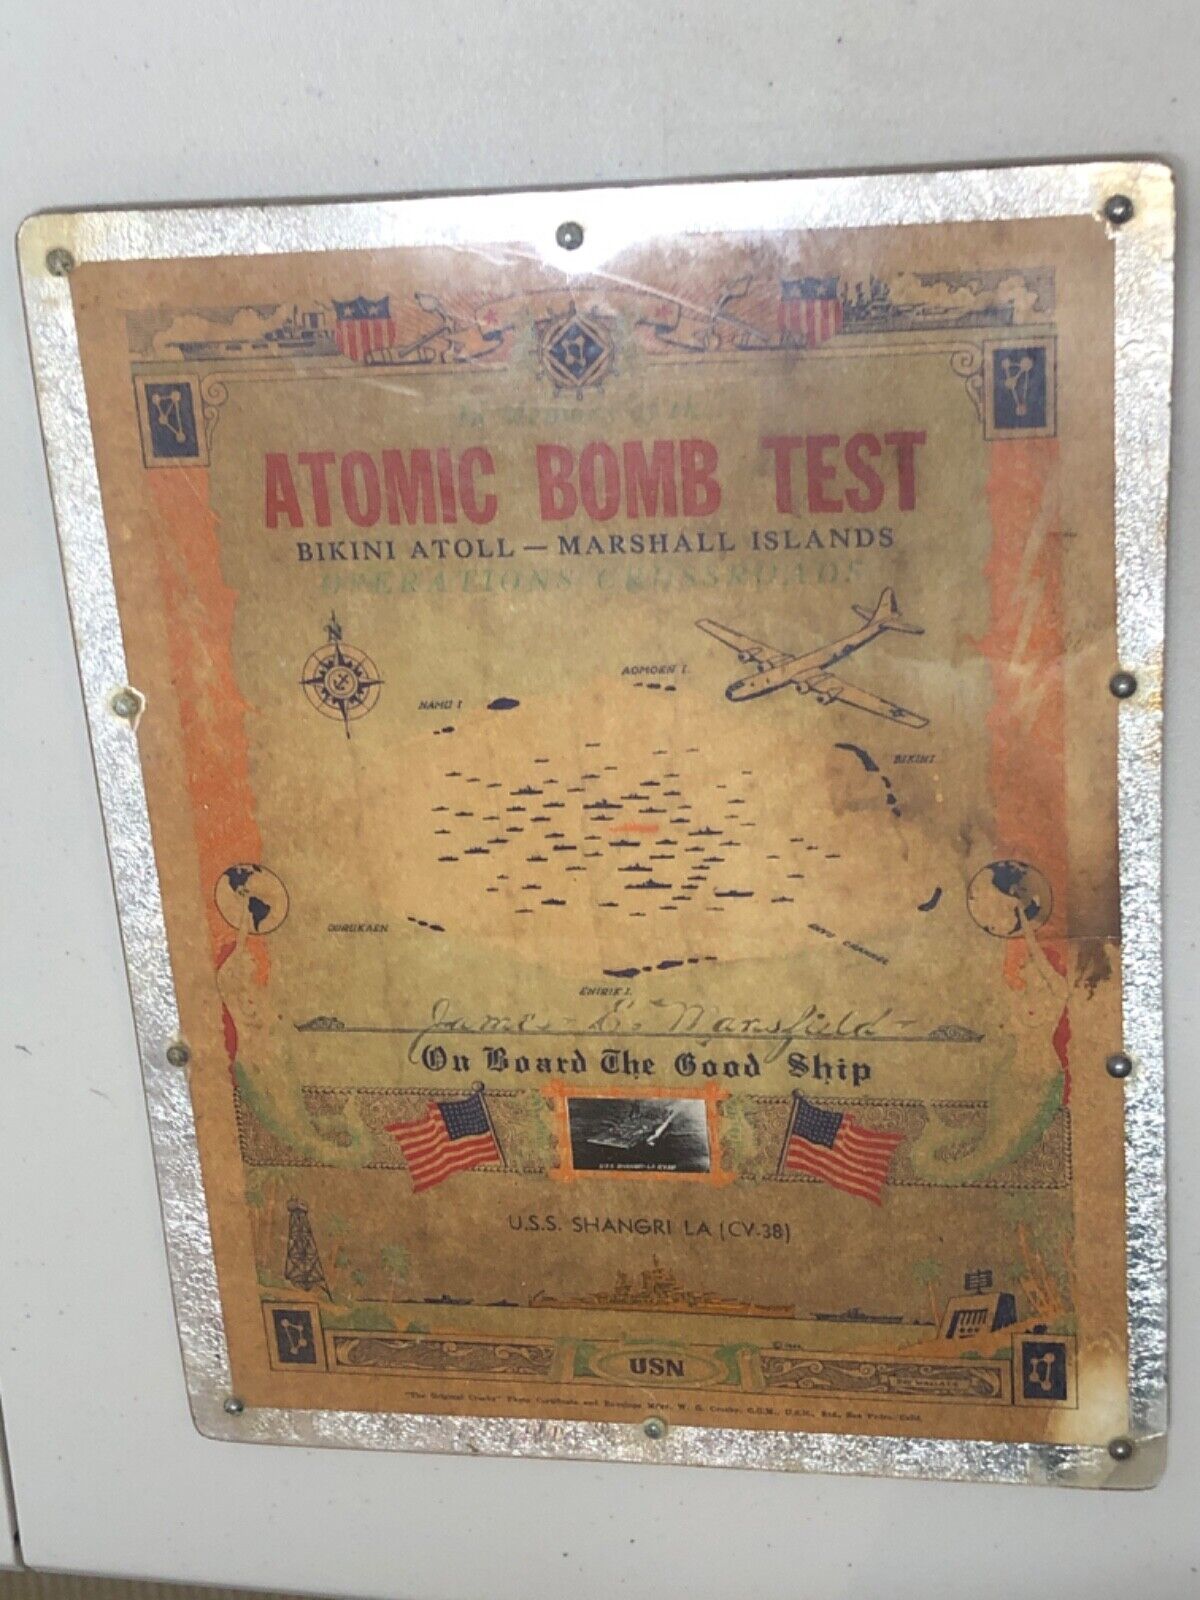 1946 US Navy Atomic Bomb Test Certificate James Mansfield U.S.S. Shangri La